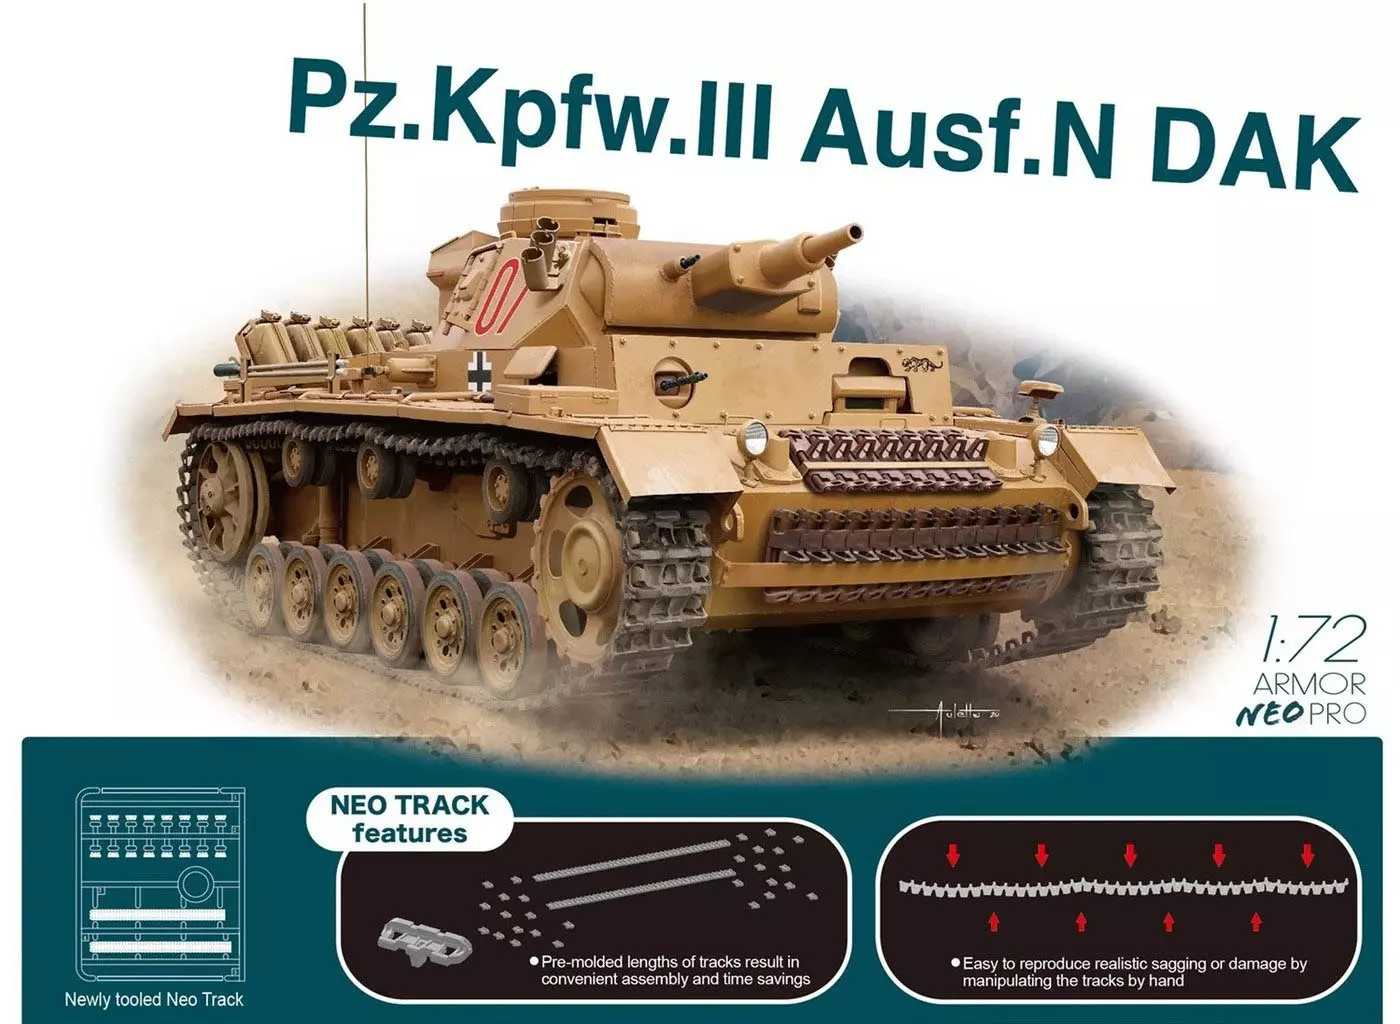 Pz.Kpfw.III Ausf.N "DAK"